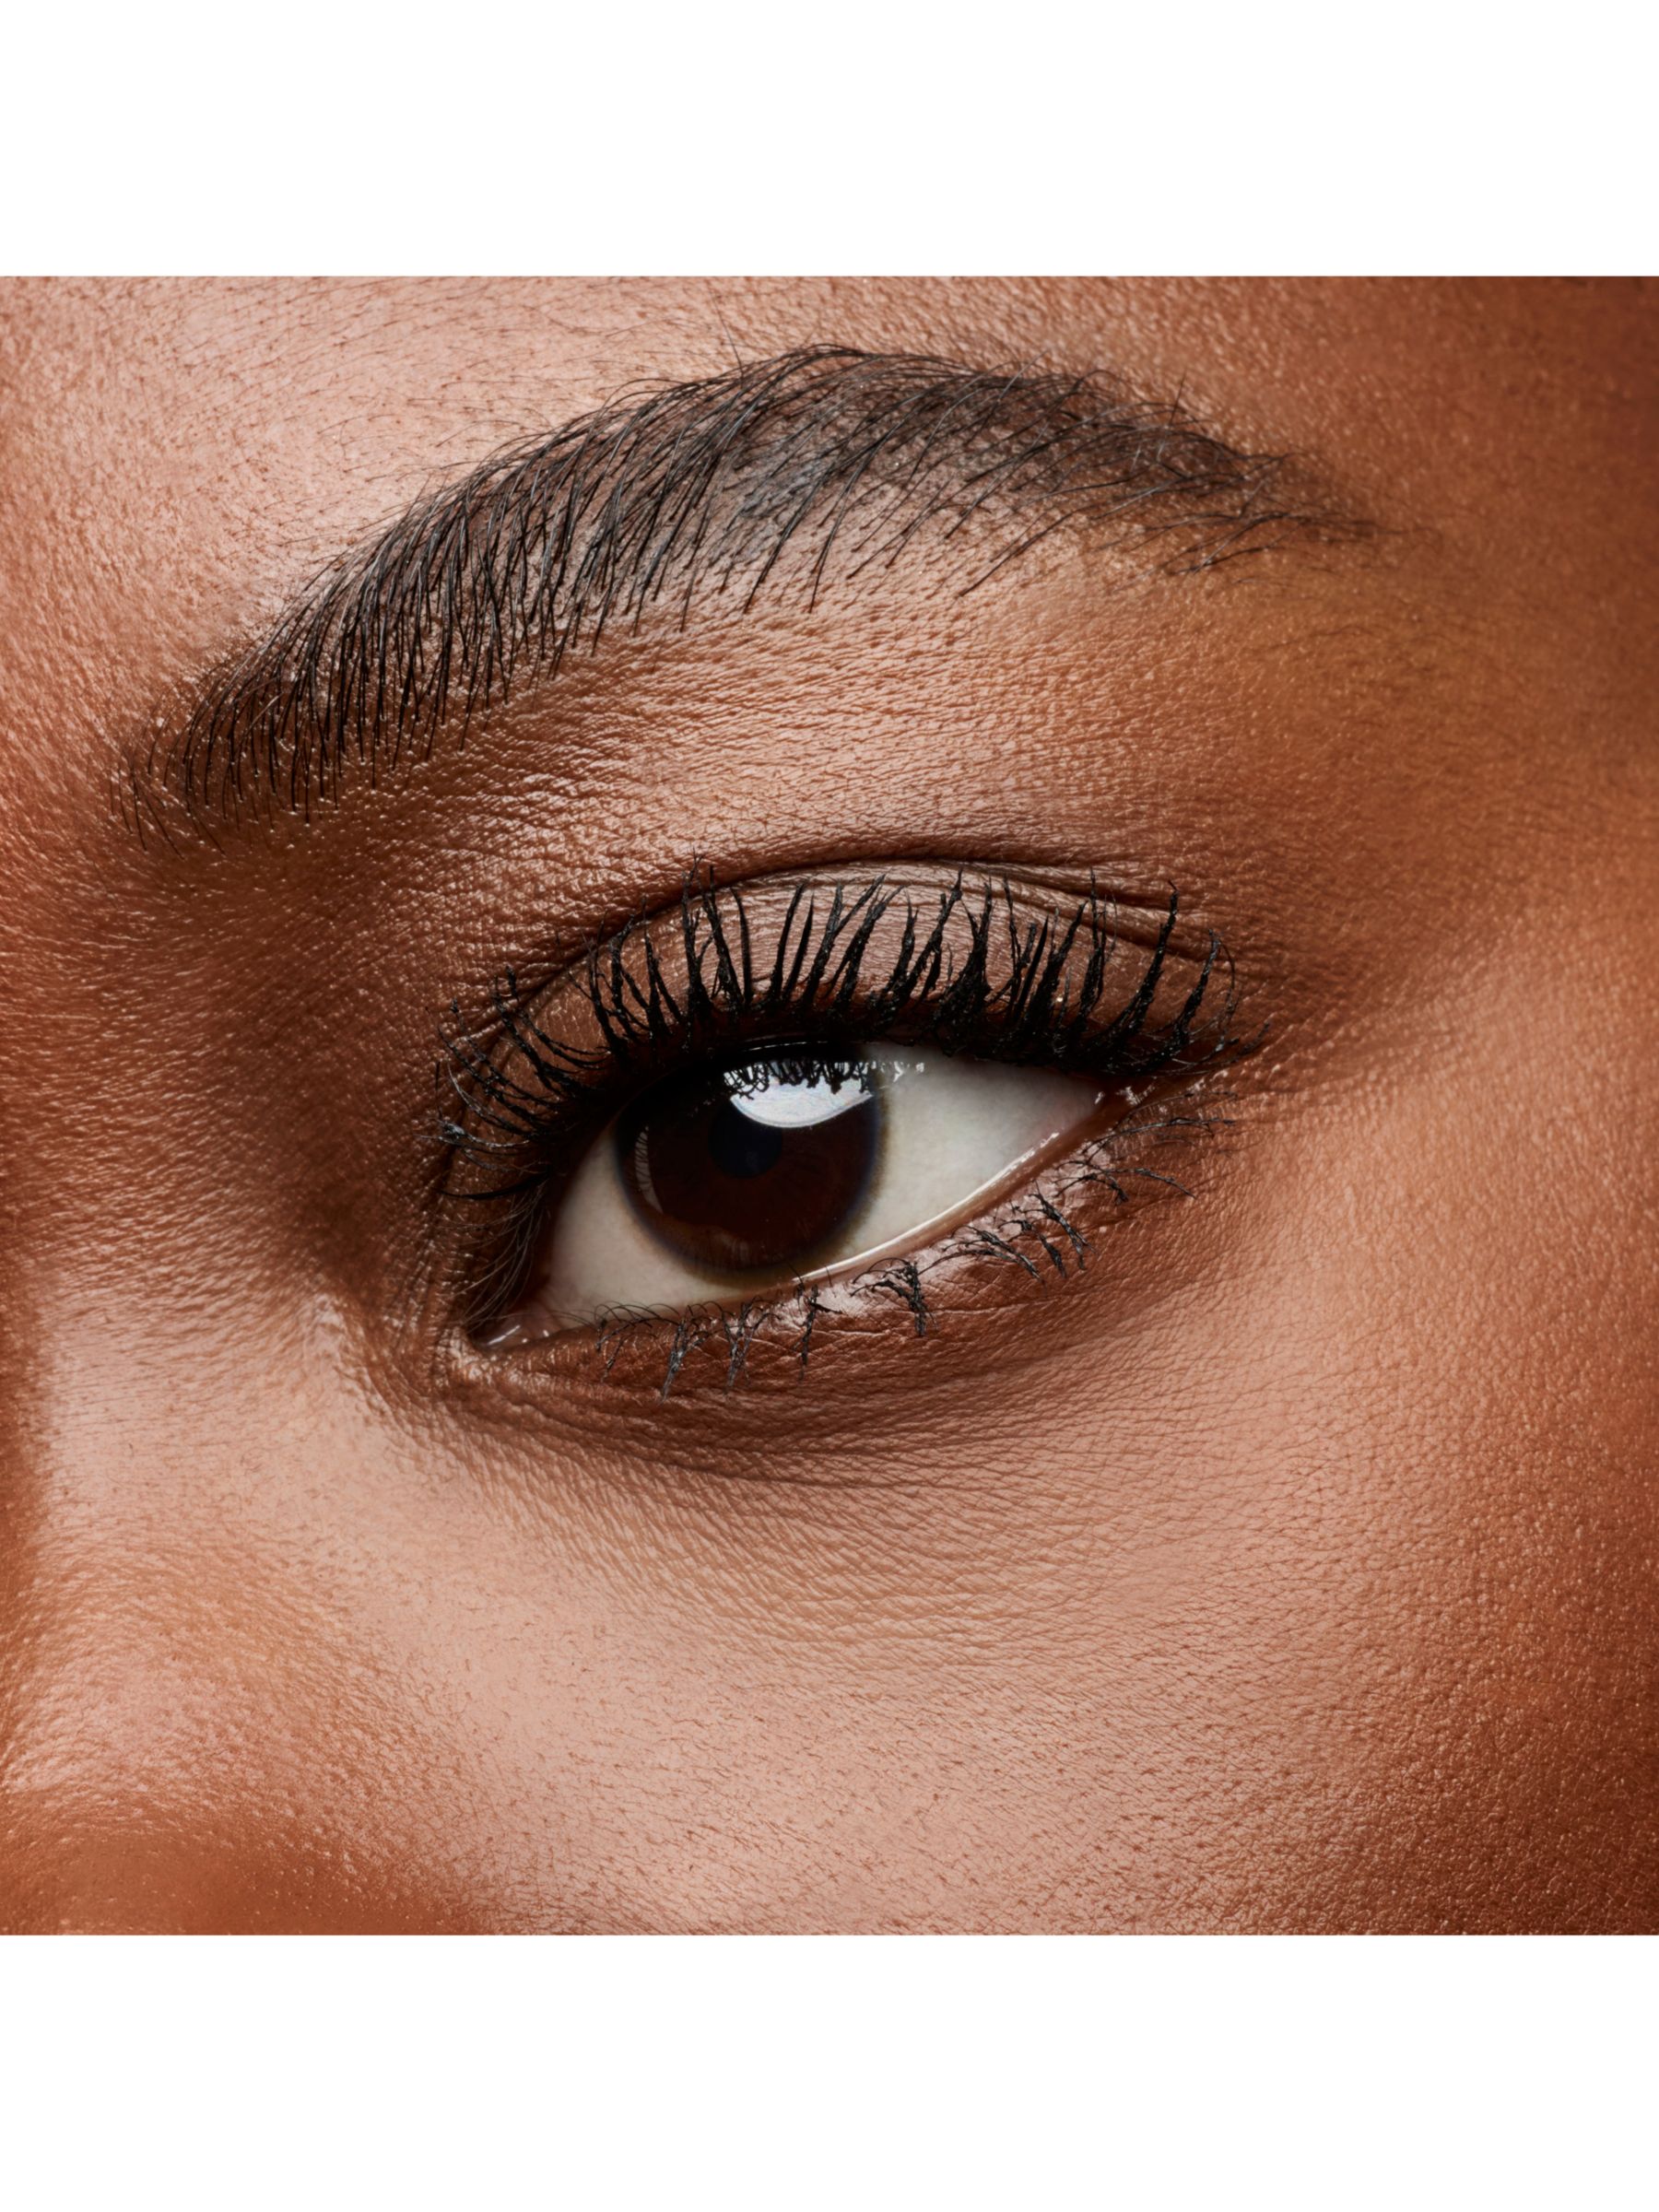  YSL MASCARA VOLUME EFFET FAUX CILS RADICAL BLACK OVER BLACK  (Black) : Beauty & Personal Care